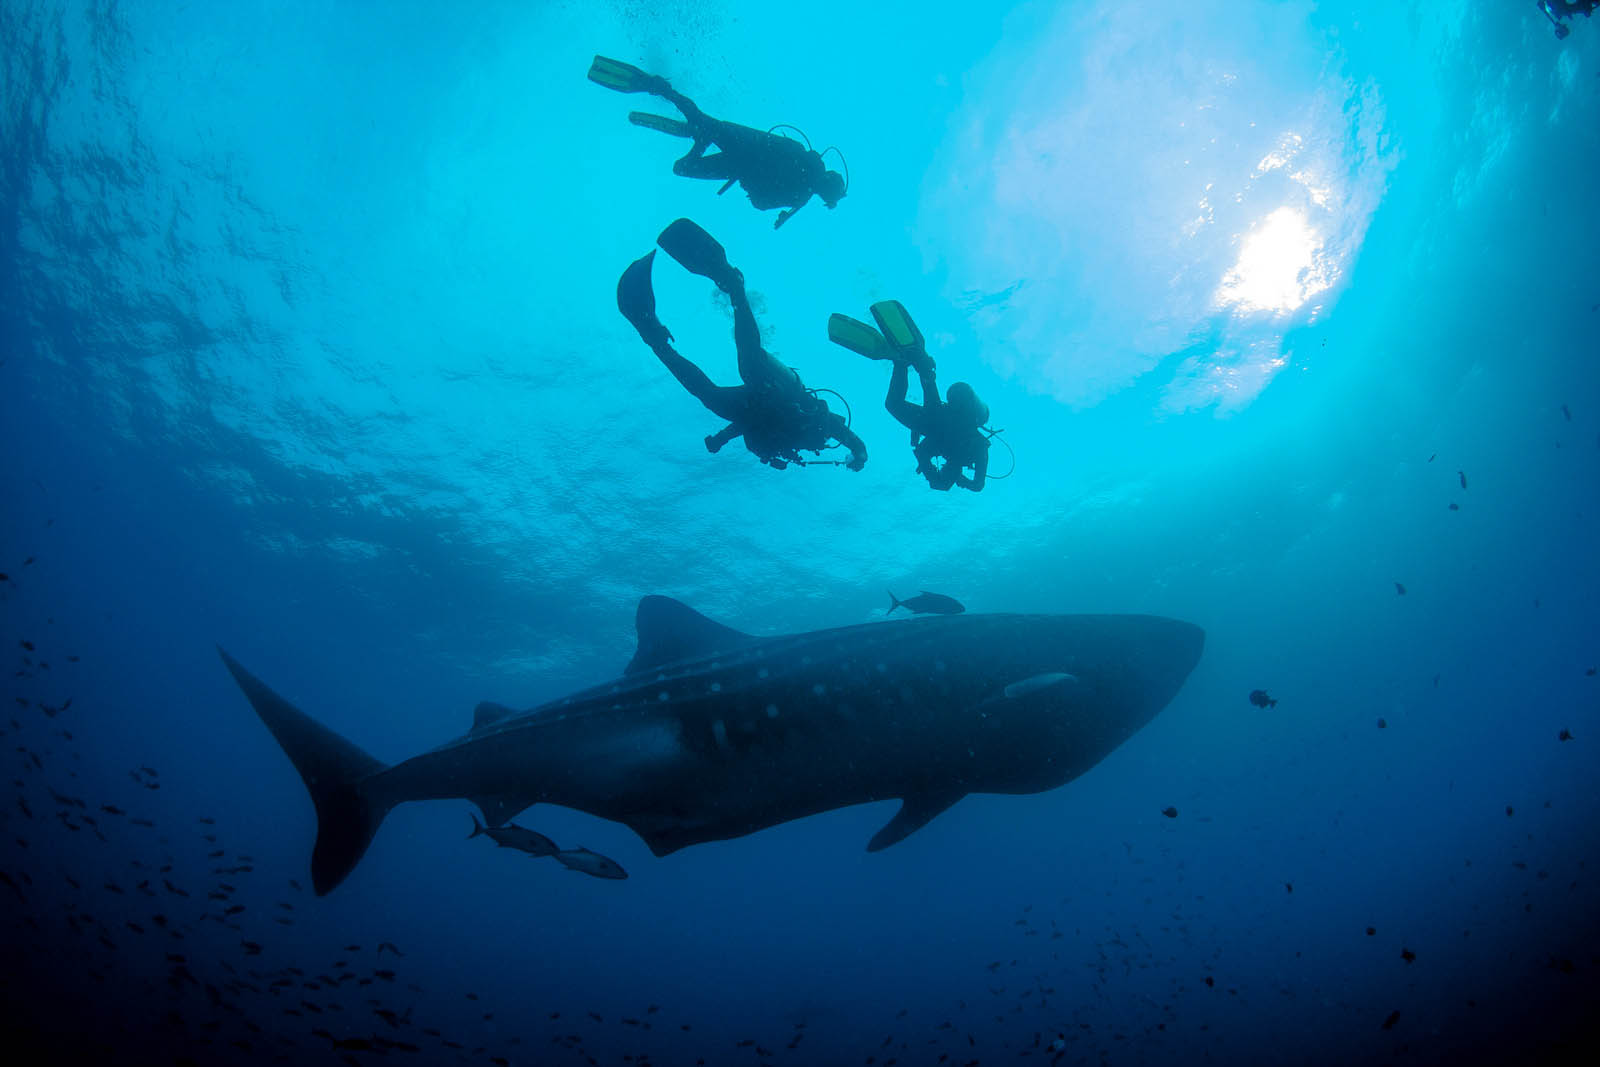 Galapagos shark, Size, Diet, Habitat, Facts, & Attacks